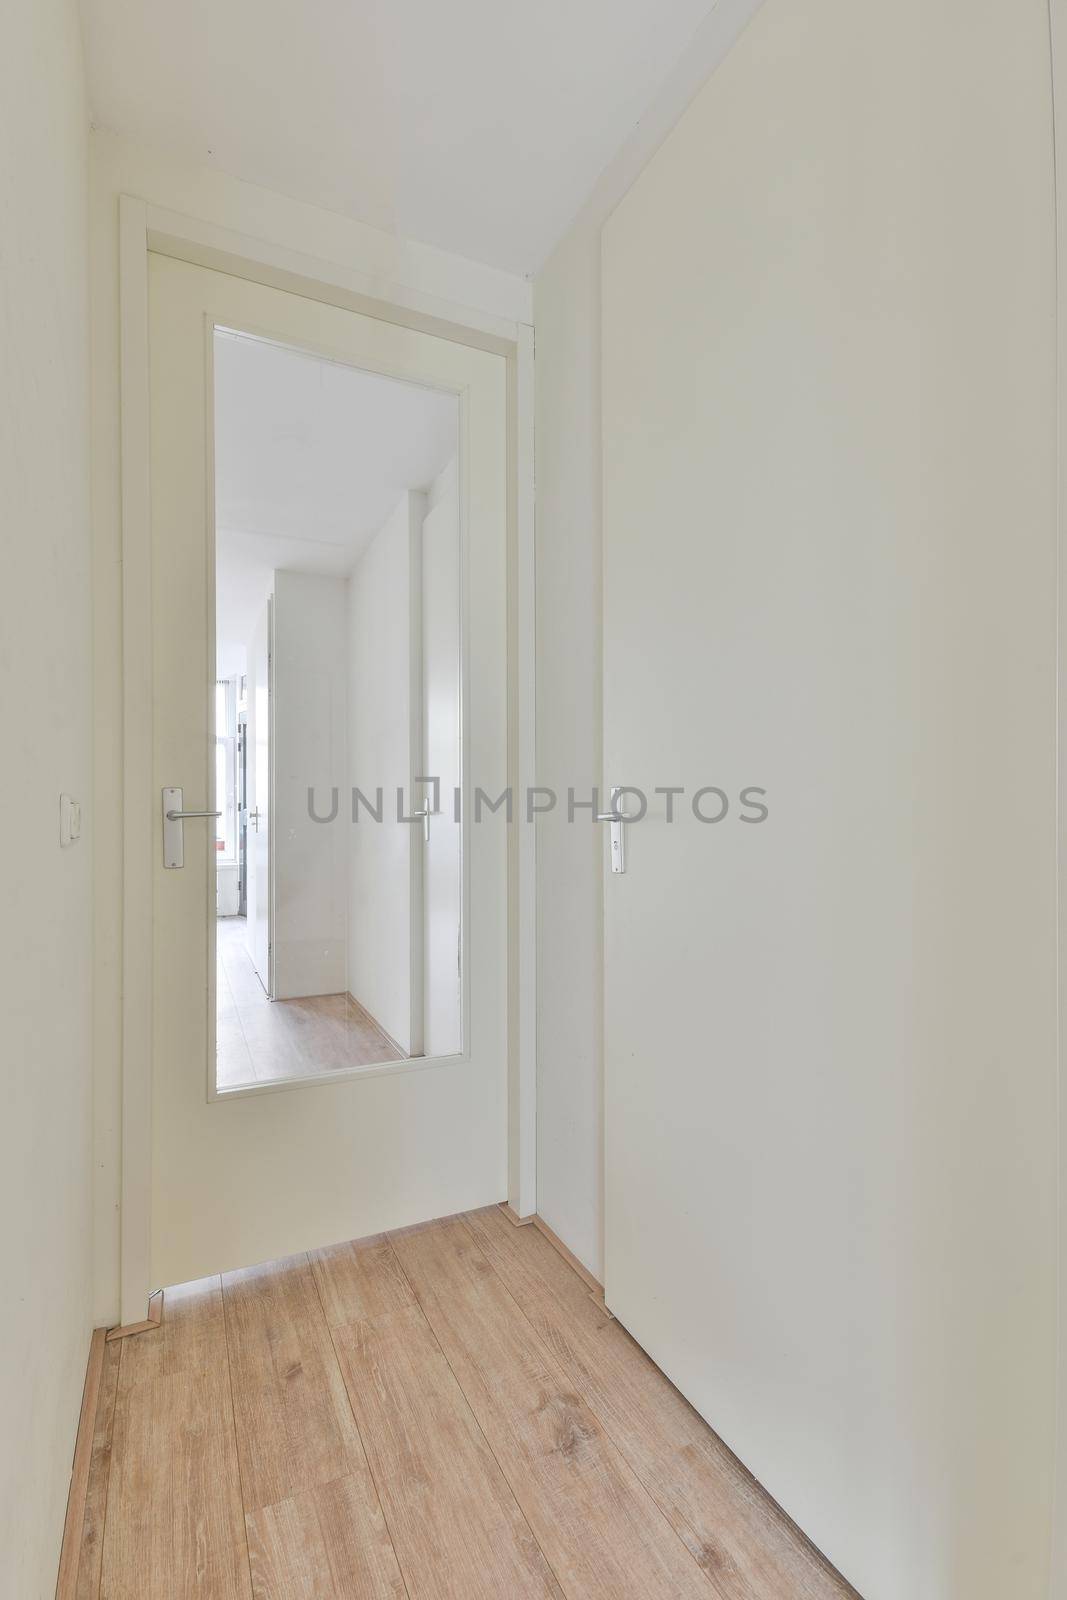 Empty room interior by casamedia